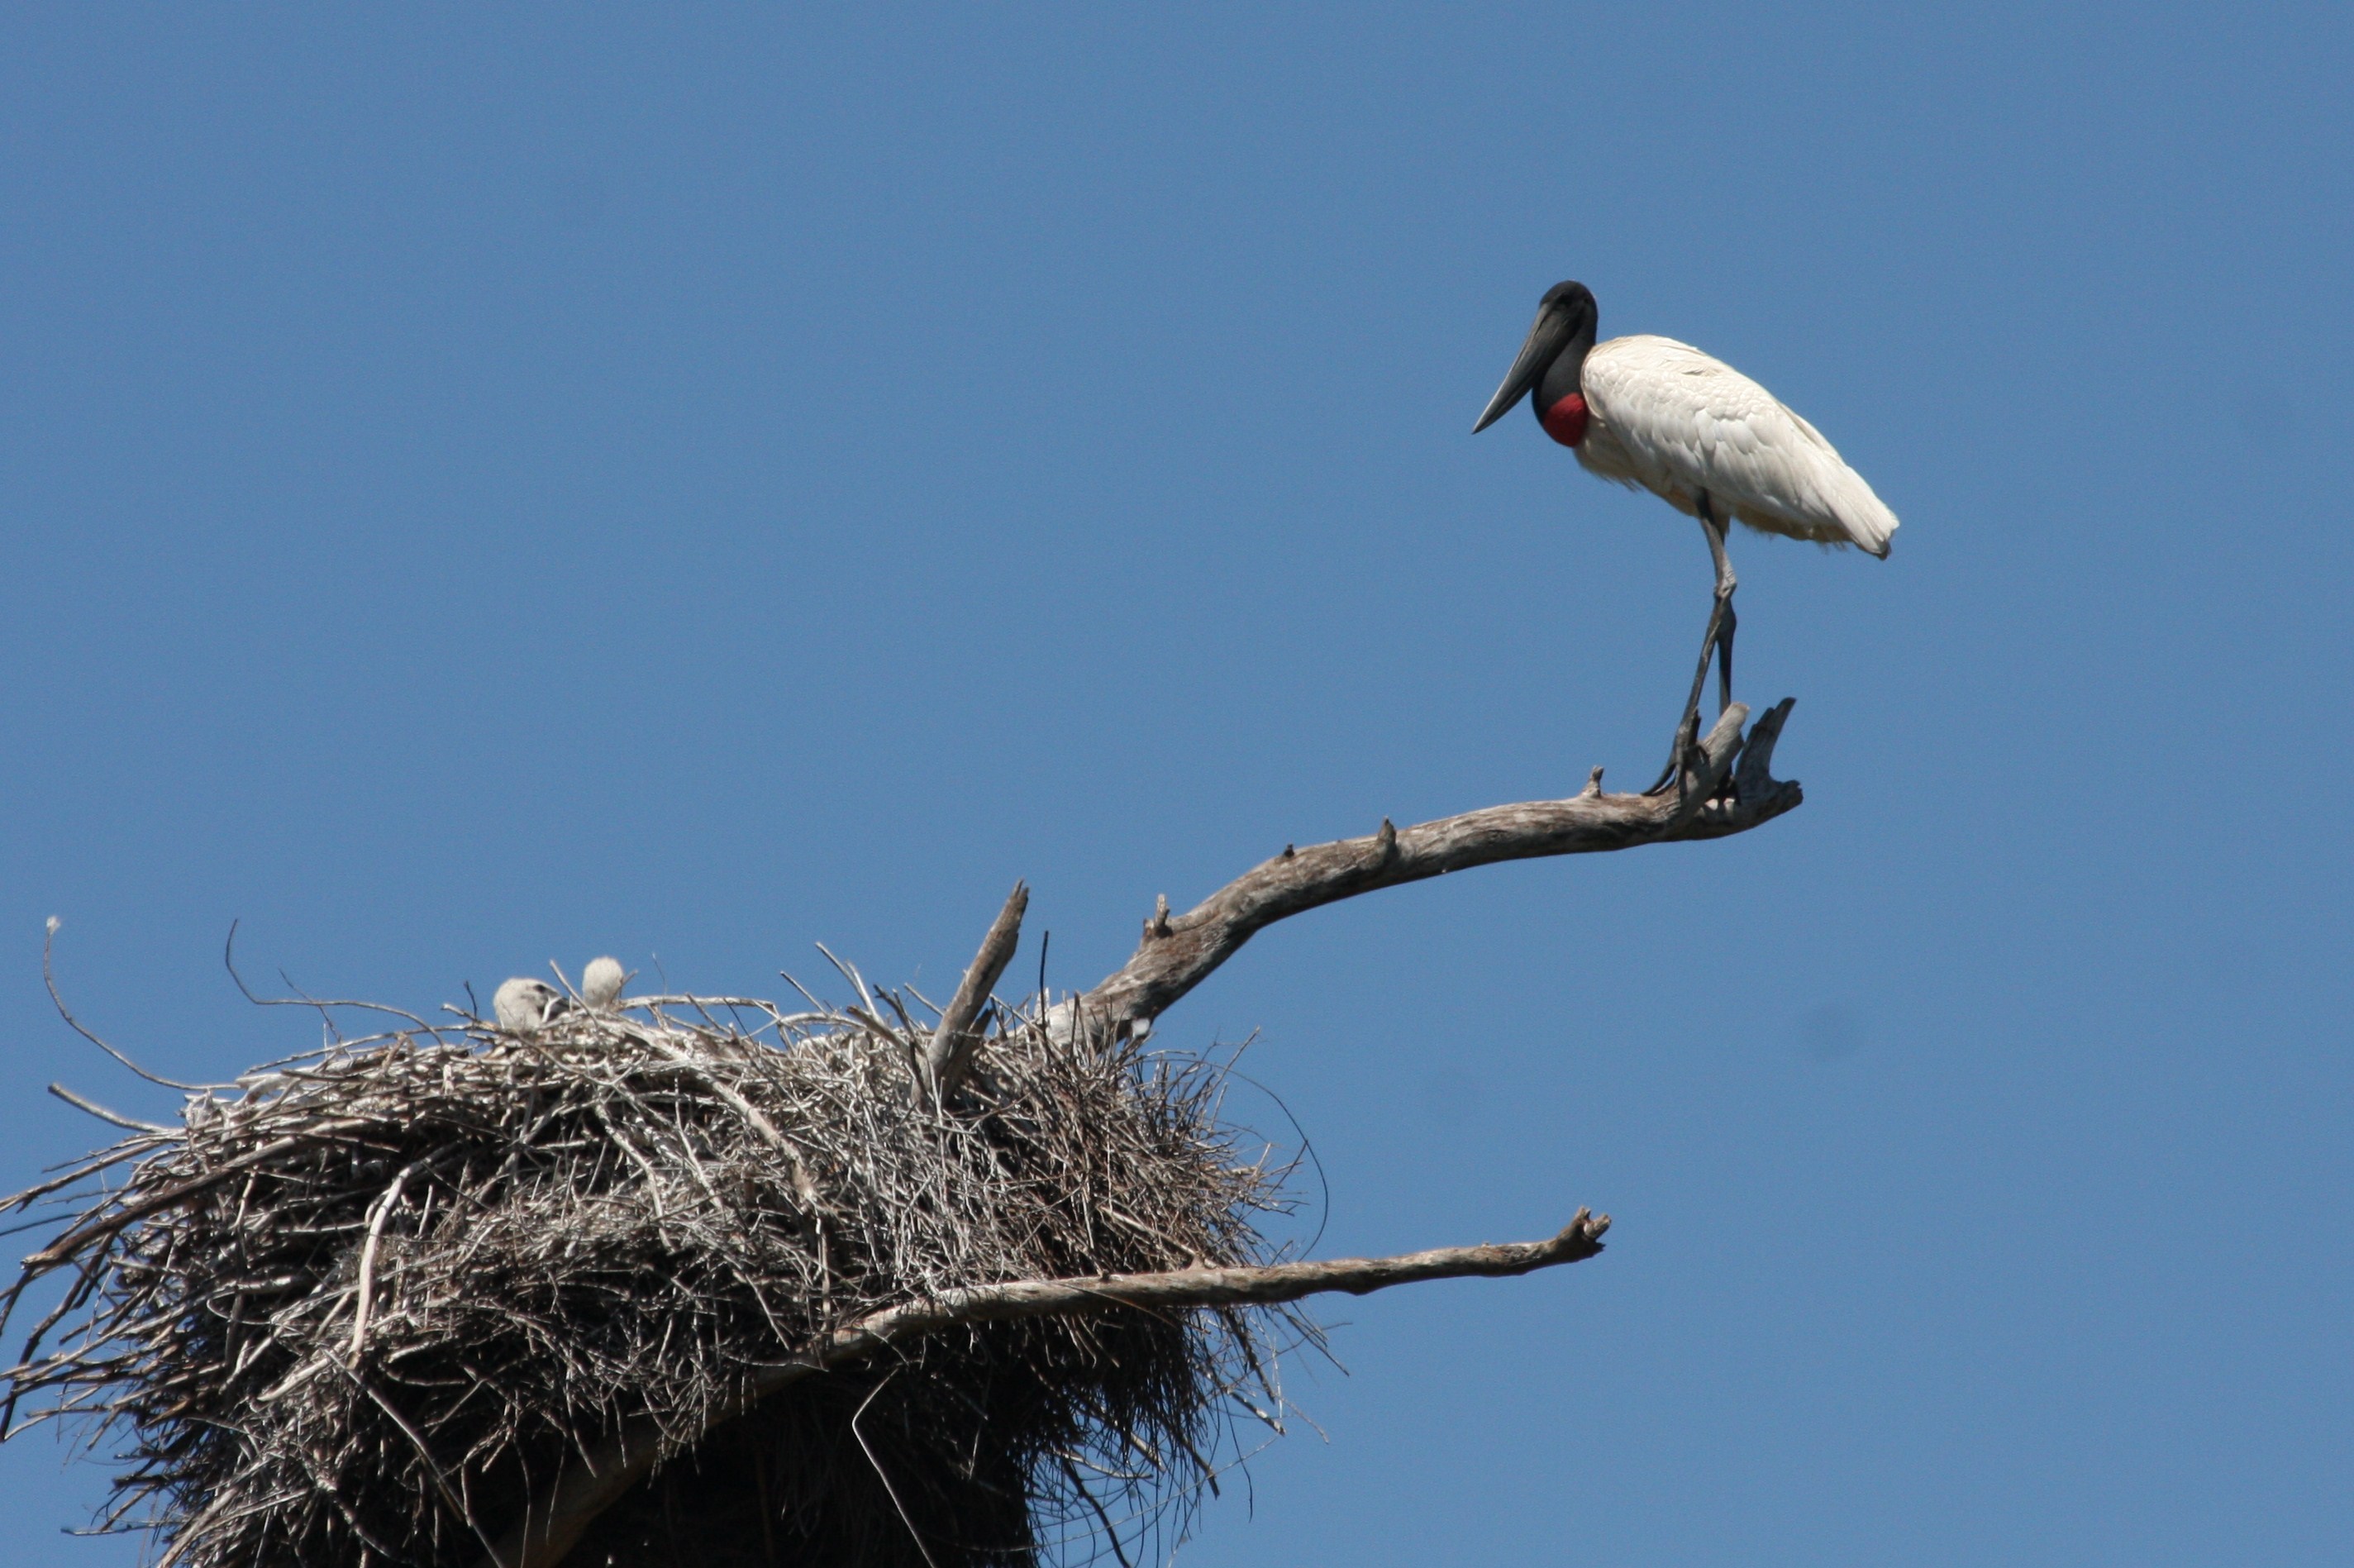 Jabiru nest with 2 young